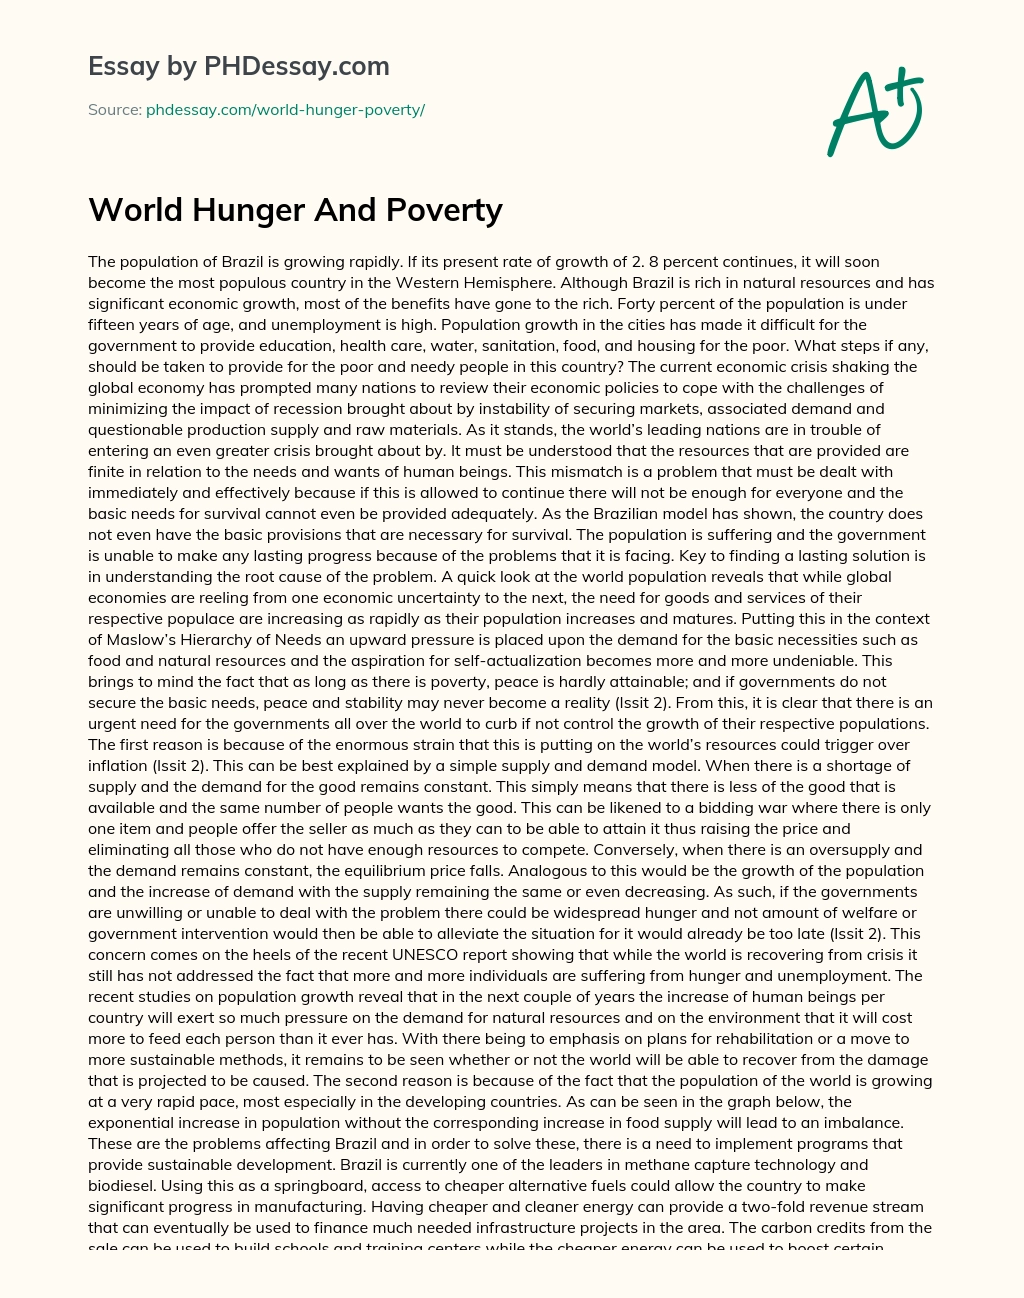 world wide poverty informative essay